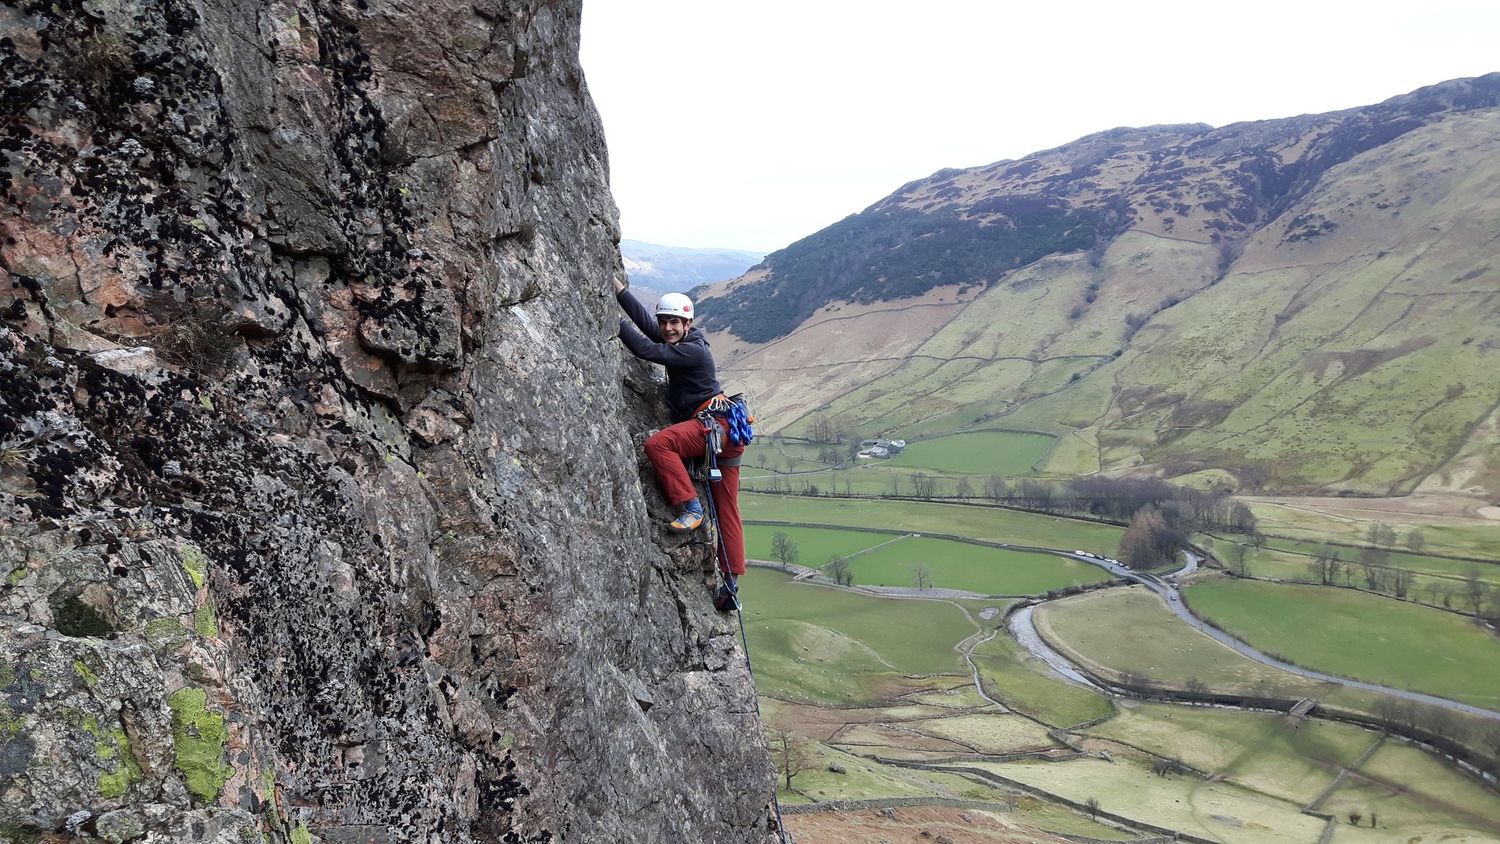  Lead climbing on a Rock Climbing Instructor course - Chris Ensoll Mountain Guide 